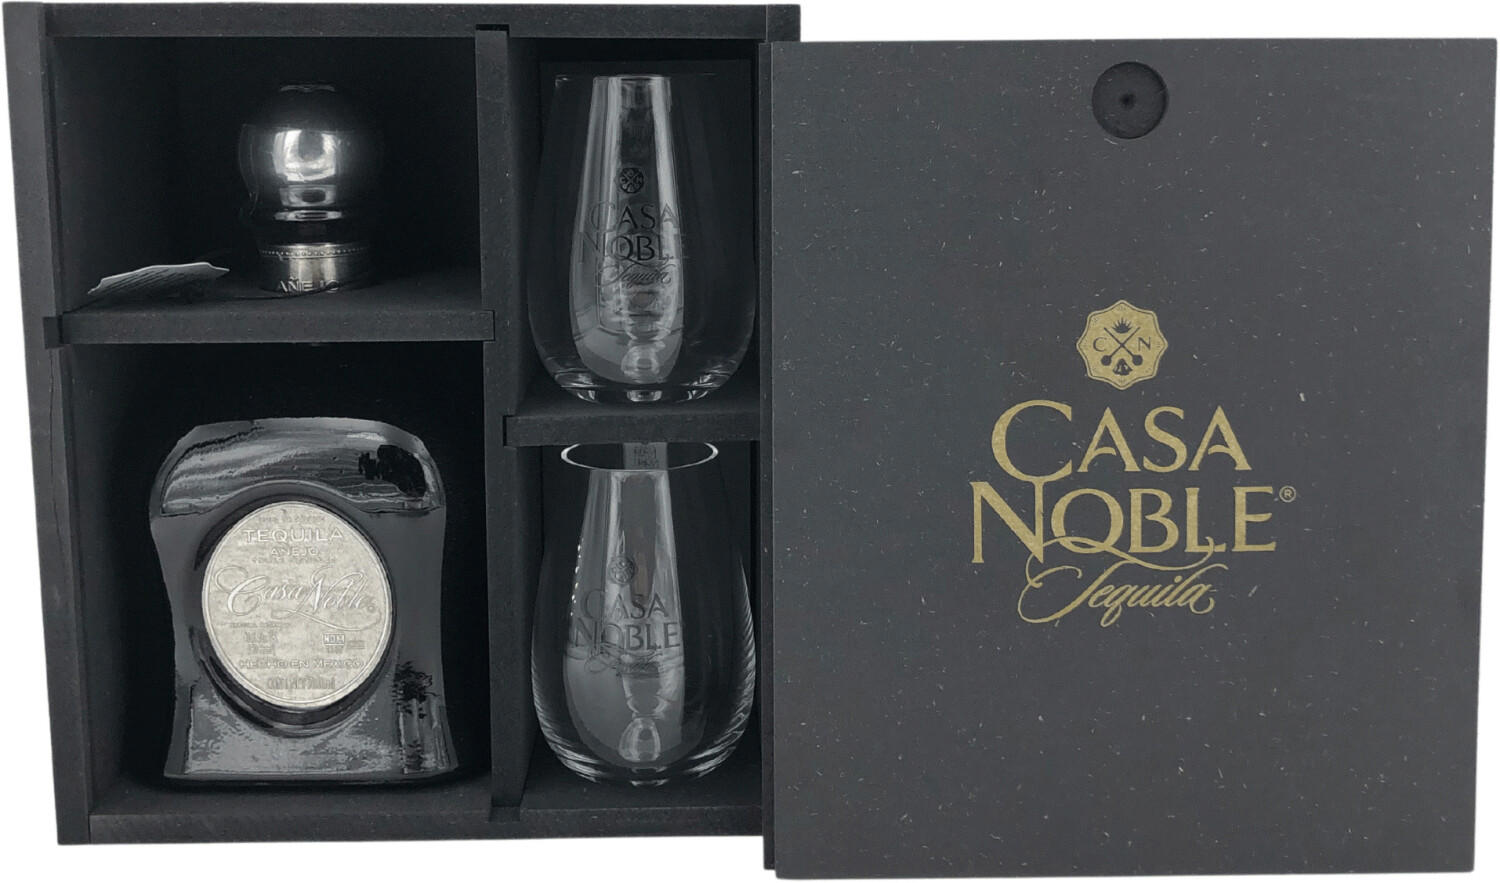 Casa Noble Anejo Single Barrel 0,7l 40% Limited Edition giftset